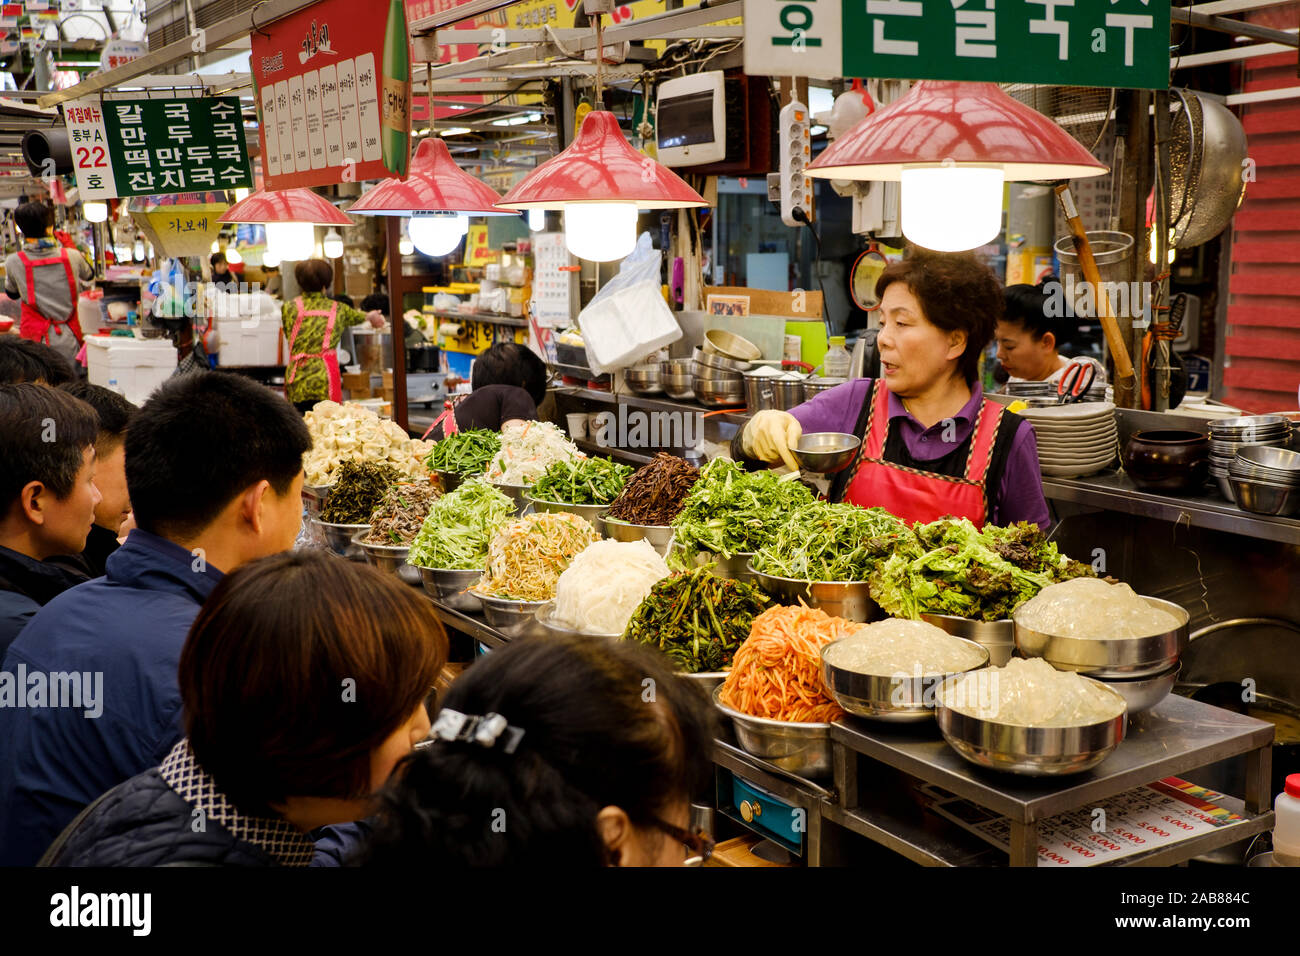 Customers at a Korean street food stall at Gwangjang Market (or Kwangjang Mkt.), Jongno-gu, Seoul, South Korea. Stock Photo